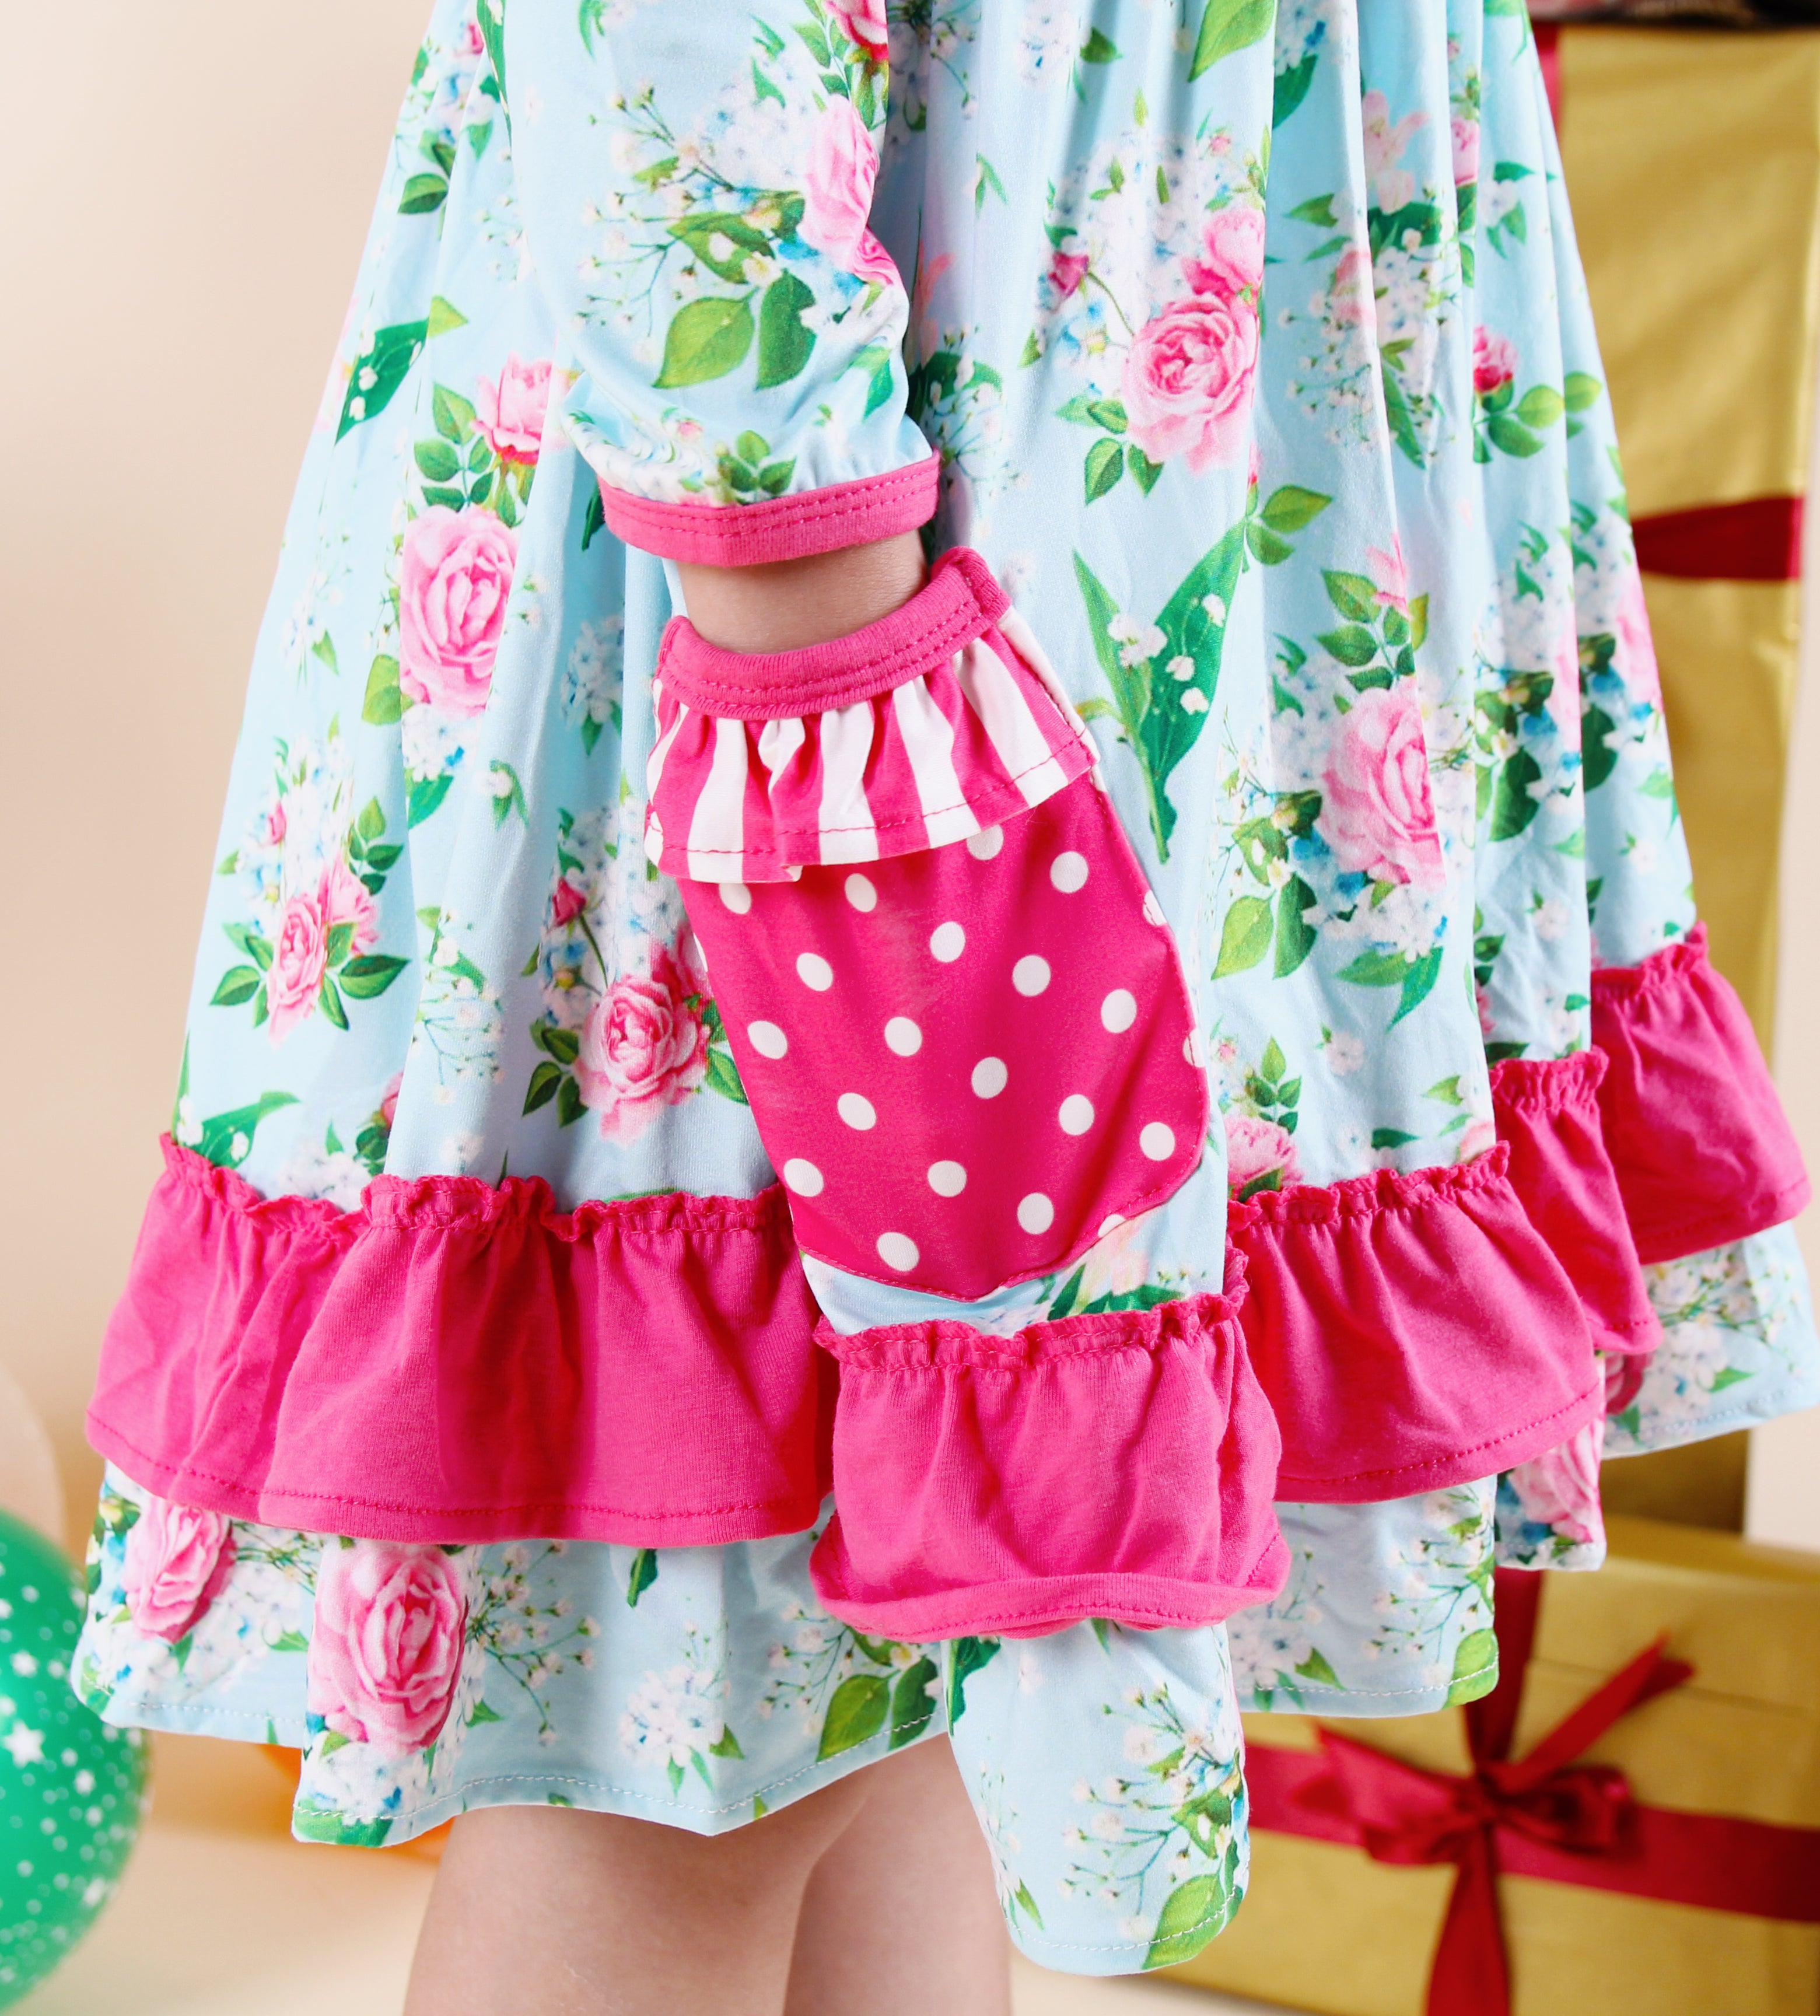 Toddler Little Girls Spring Easter Rose Floral Twirl Dress + Free hairband - Pink Mint - Angeline Kids